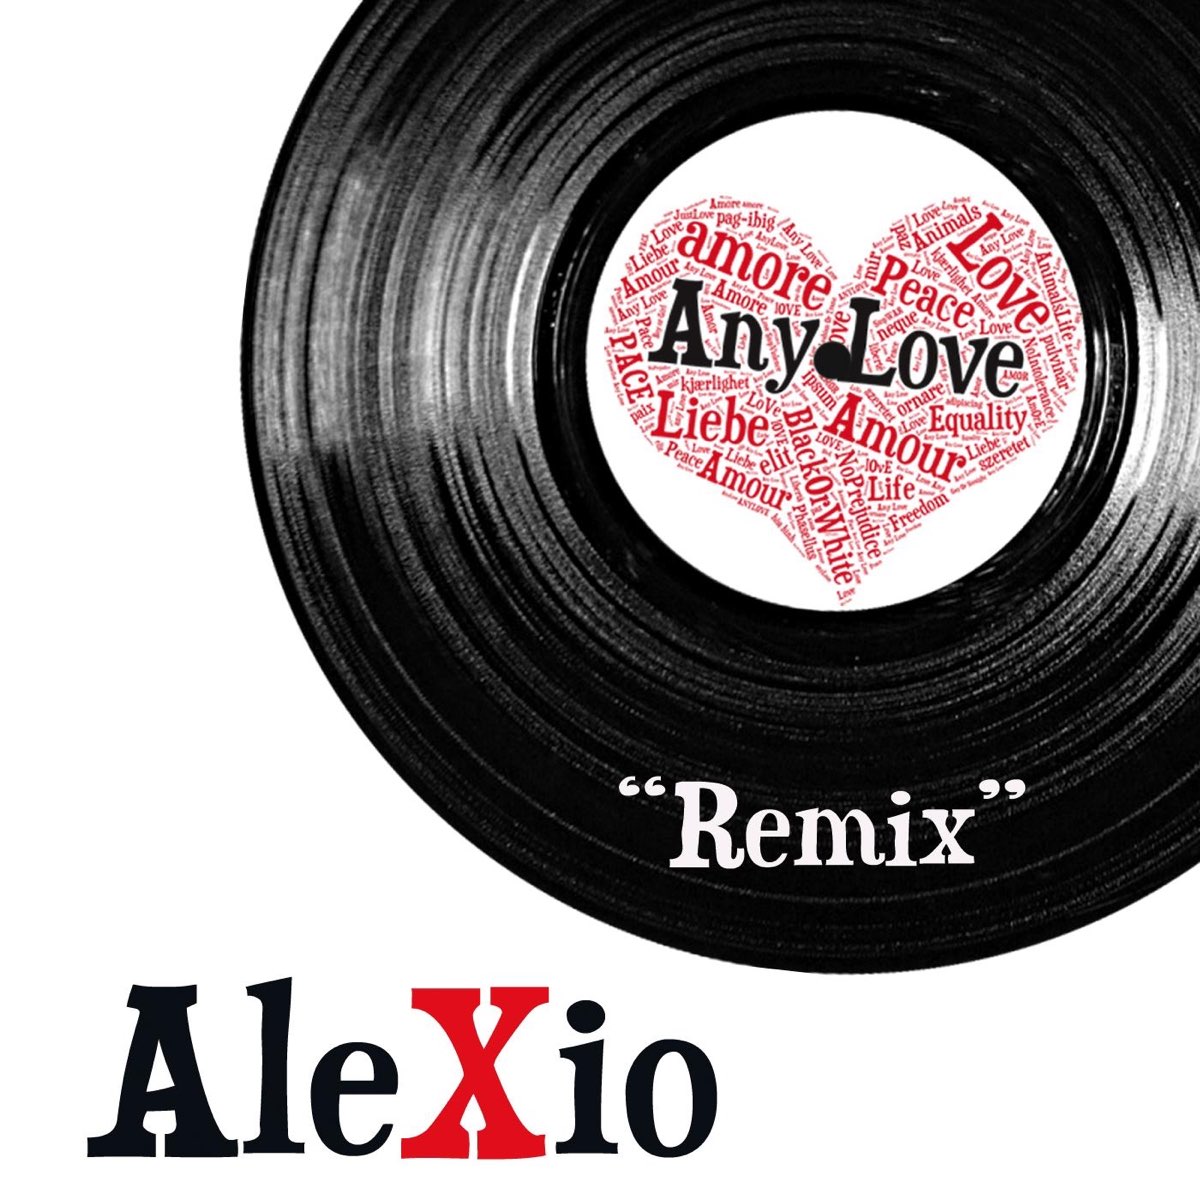 Little love remix. Love Remix. Lovely песня ремикс. Любимые Remix. Any Love.